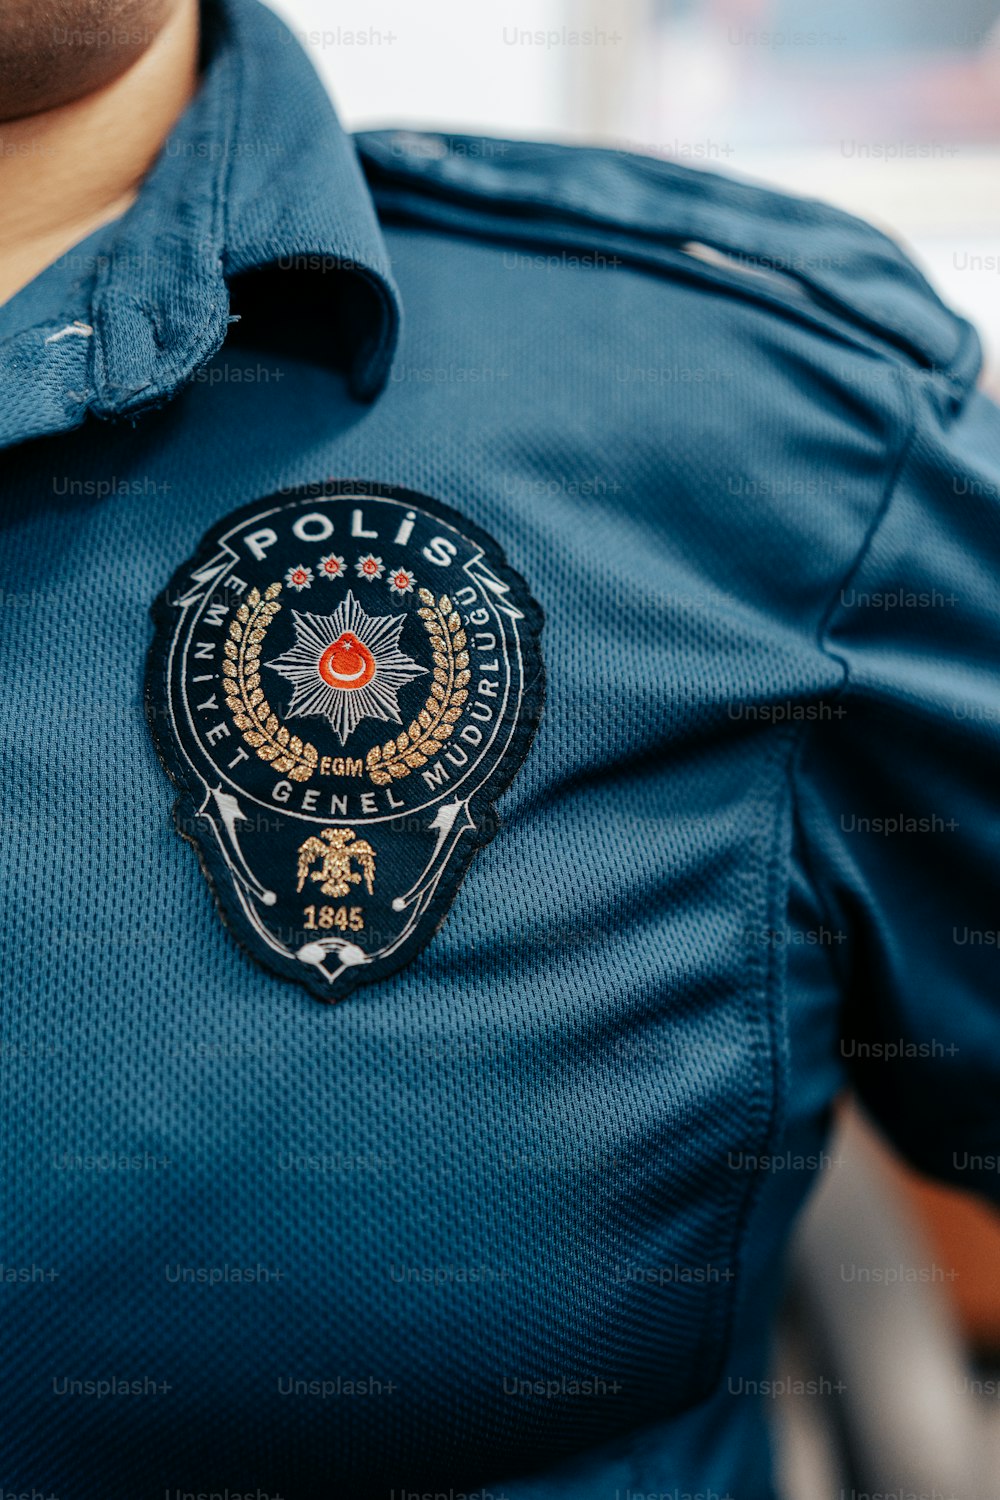 Un agente di polizia indossa un'uniforme blu